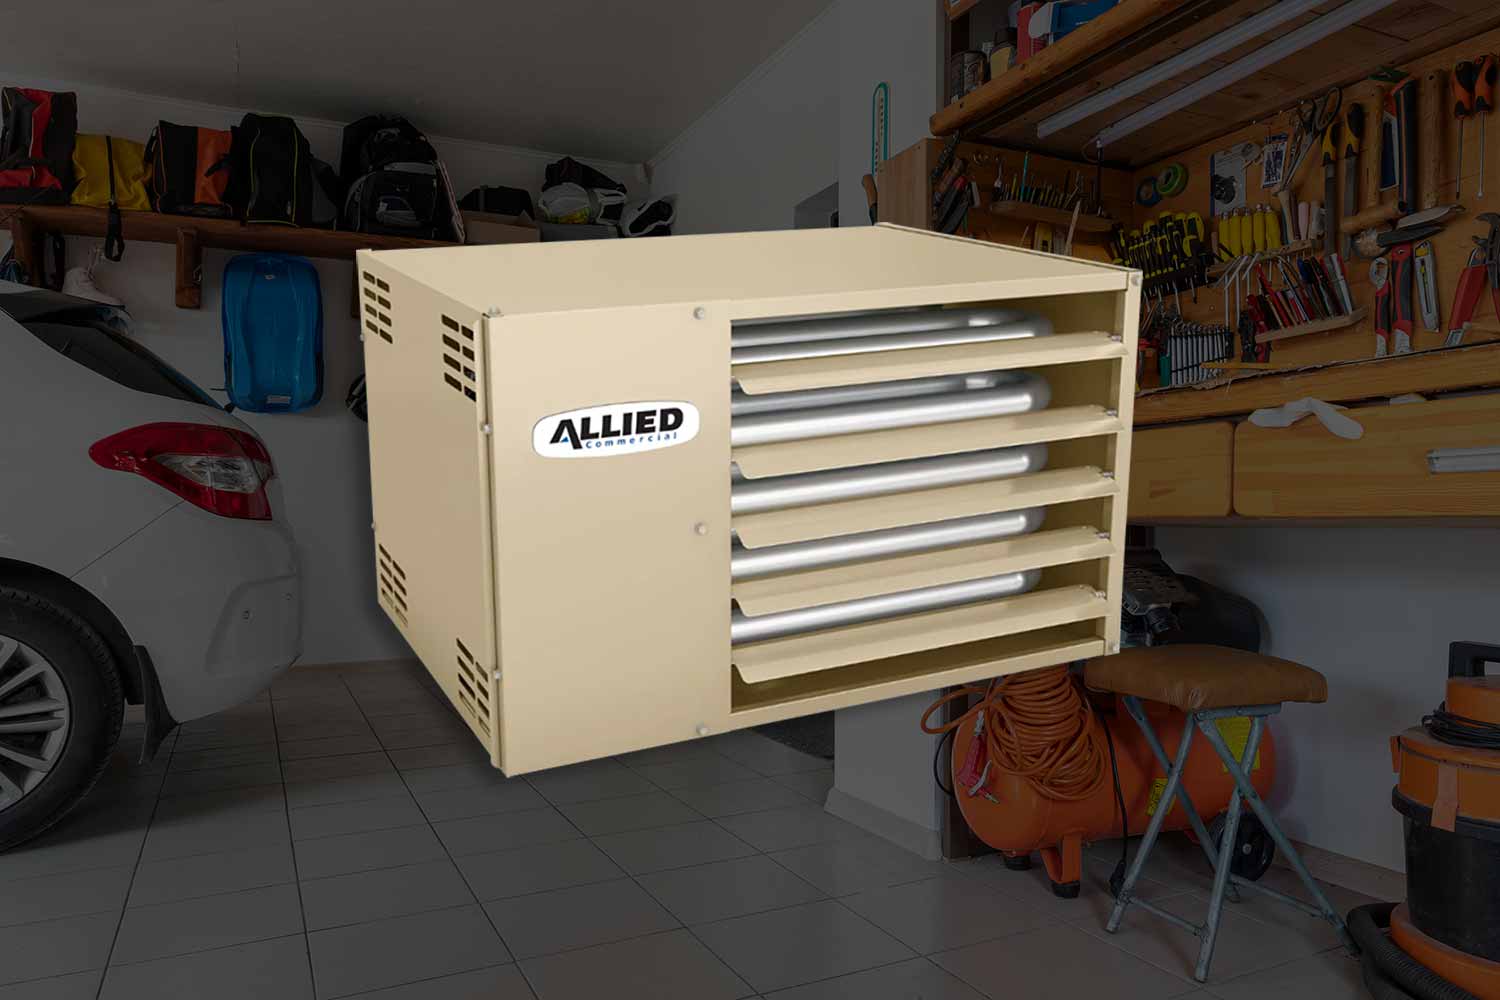 Allied garage heater service in calgary